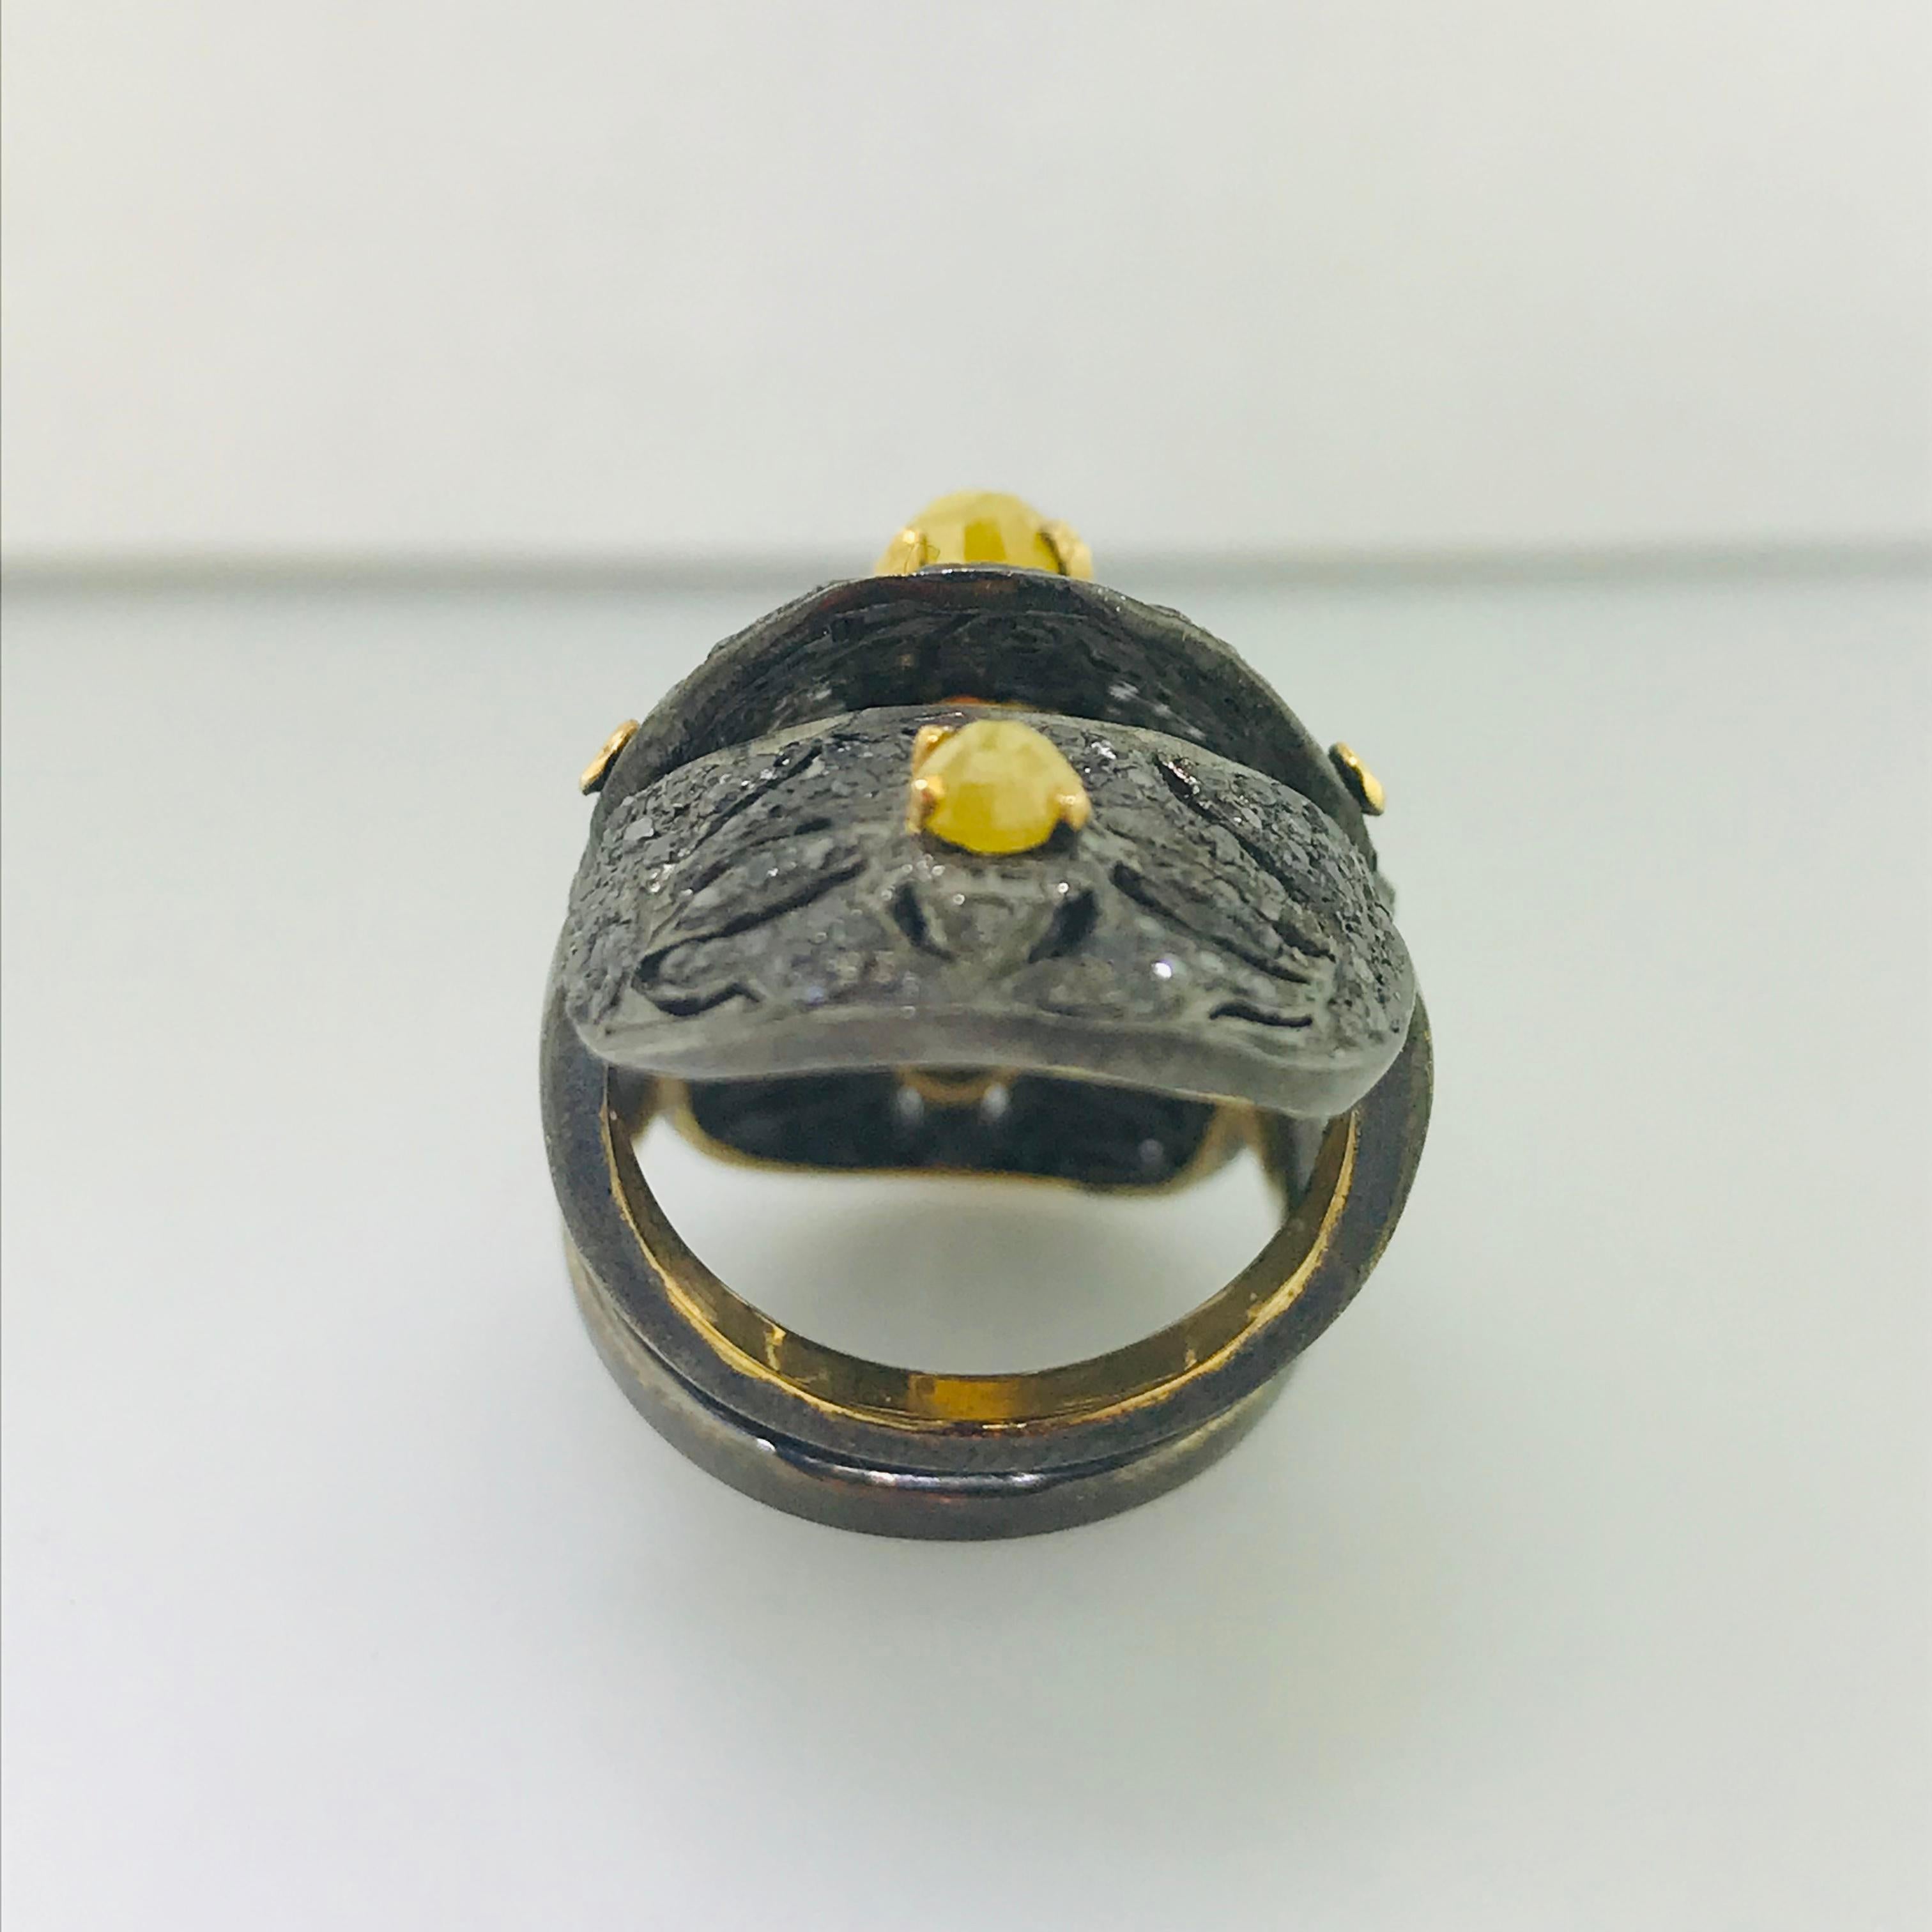 Women's Medieval Vintage Ring 4 Carat tw Black Diamond & Yellow Diamond Knuckle Ring 